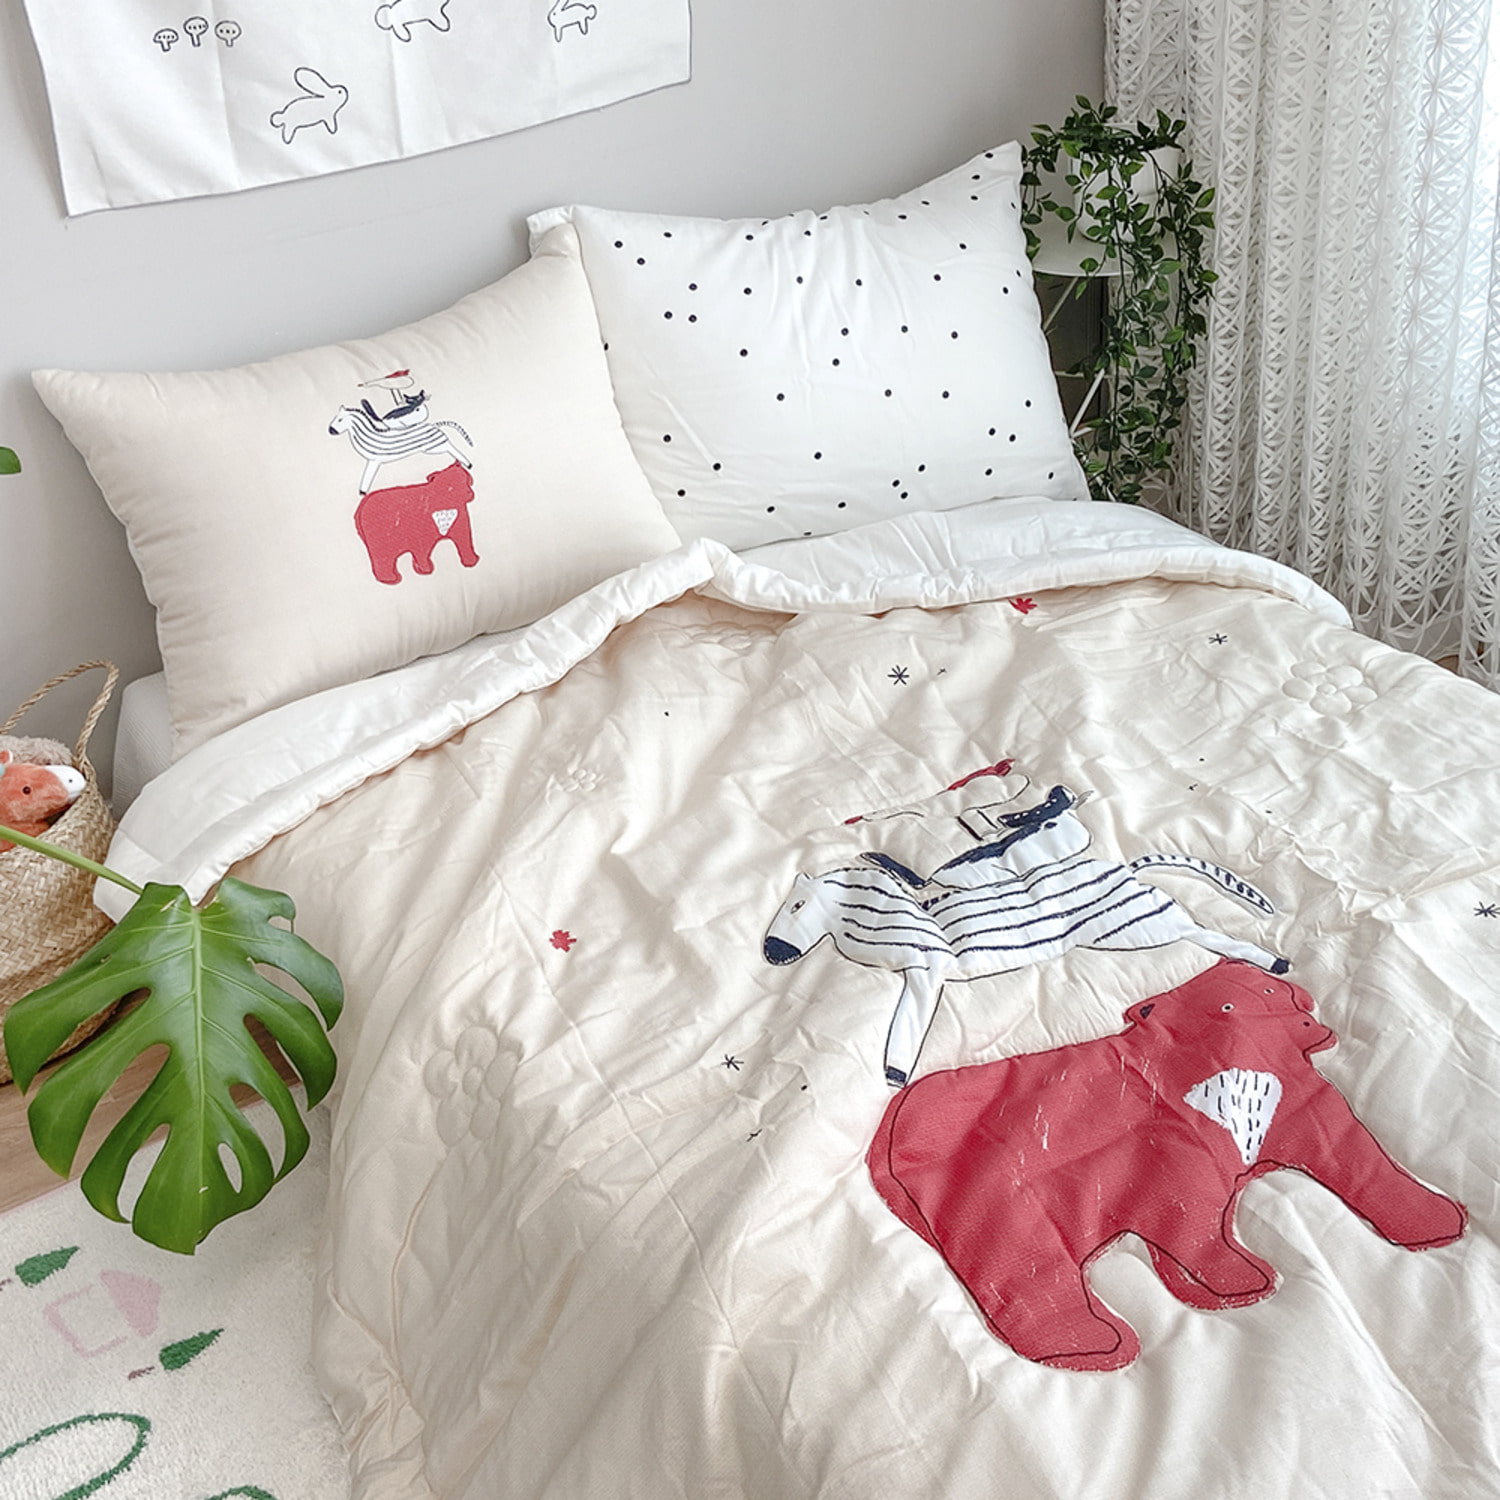 [drawing AMY] Circus four seasons bed comforter set